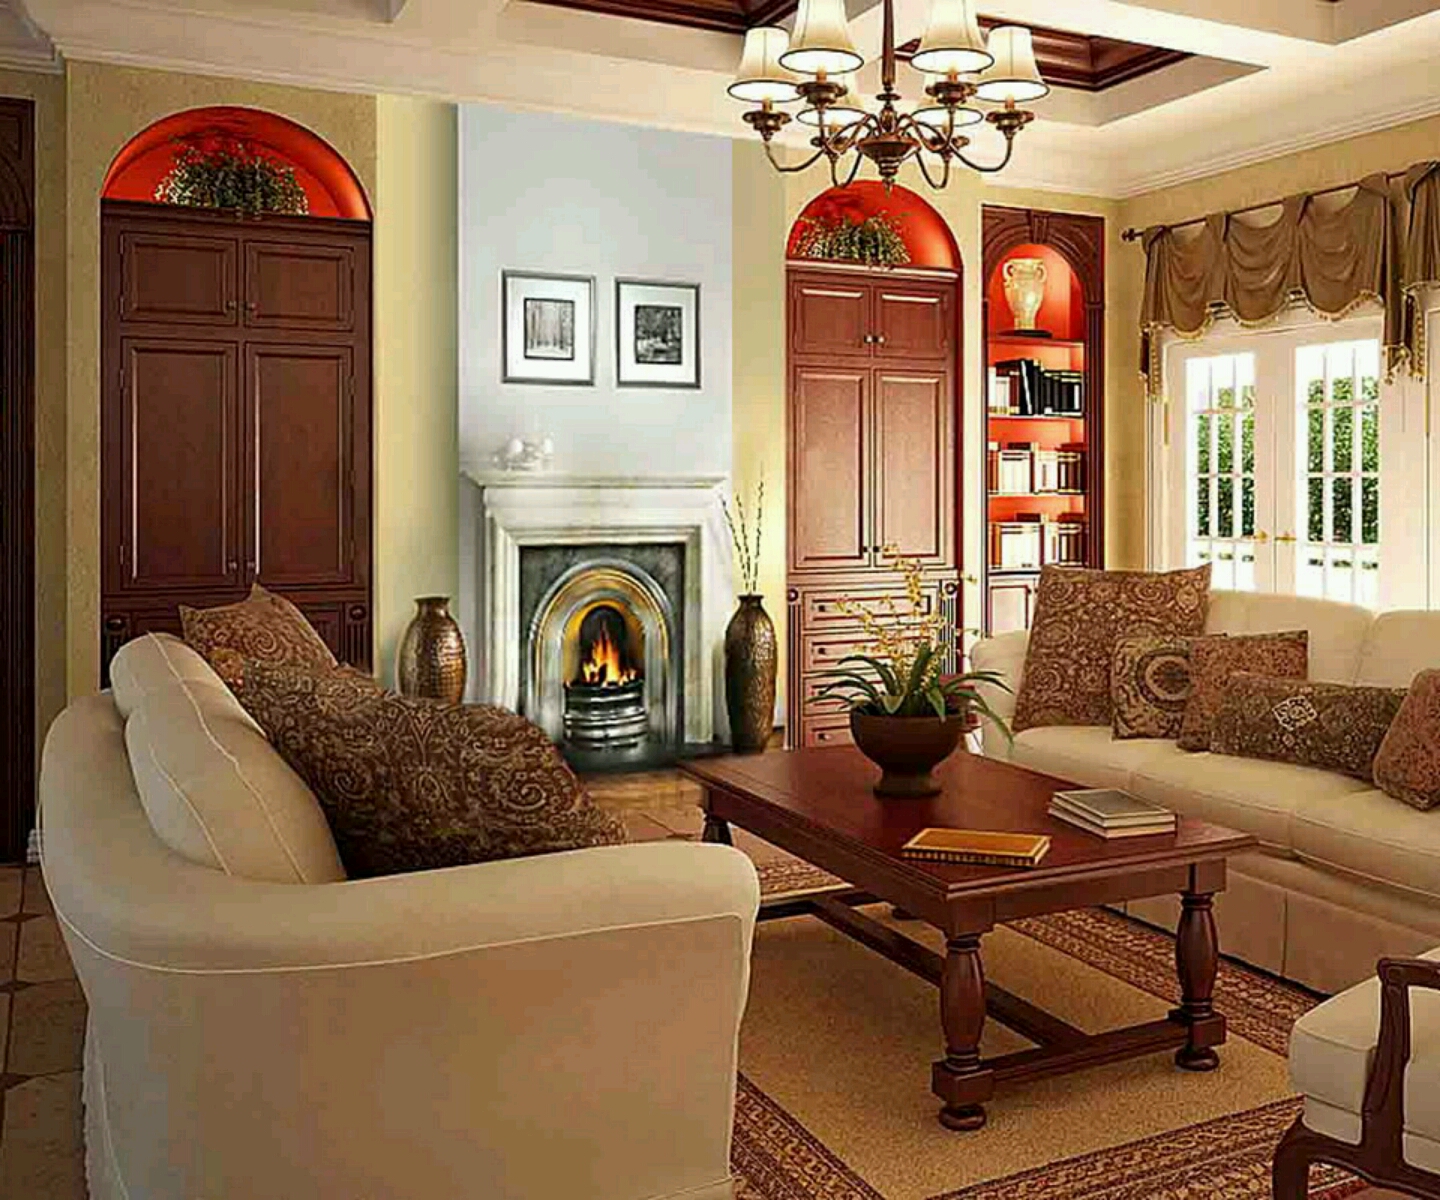 iBeautifuli imoderni sofa ifurniturei designs An Interior Design